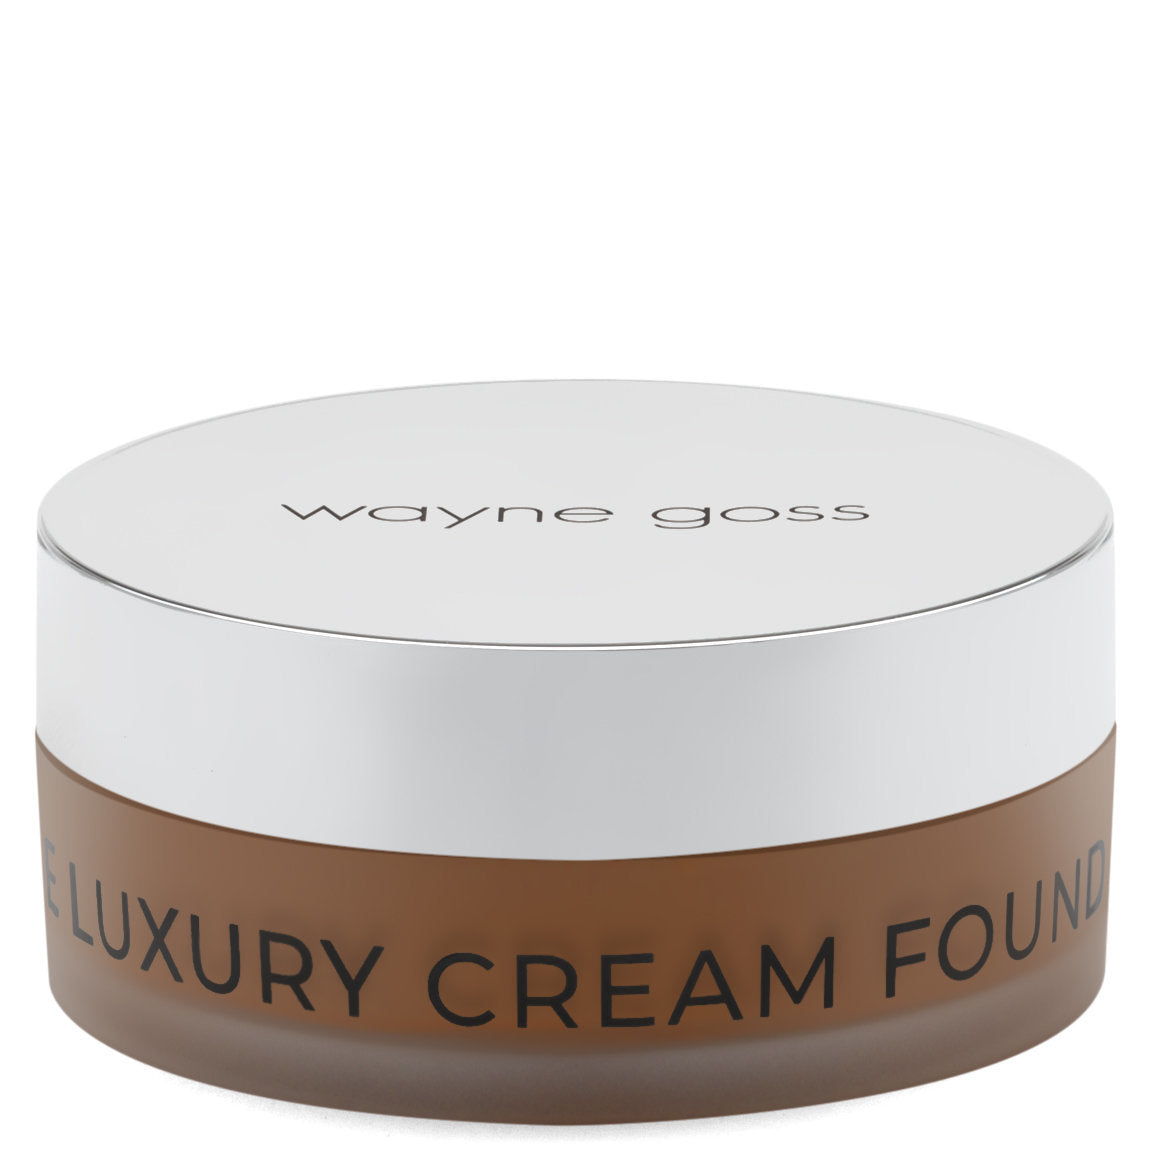 The Luxury Cream Foundation - Shade 04